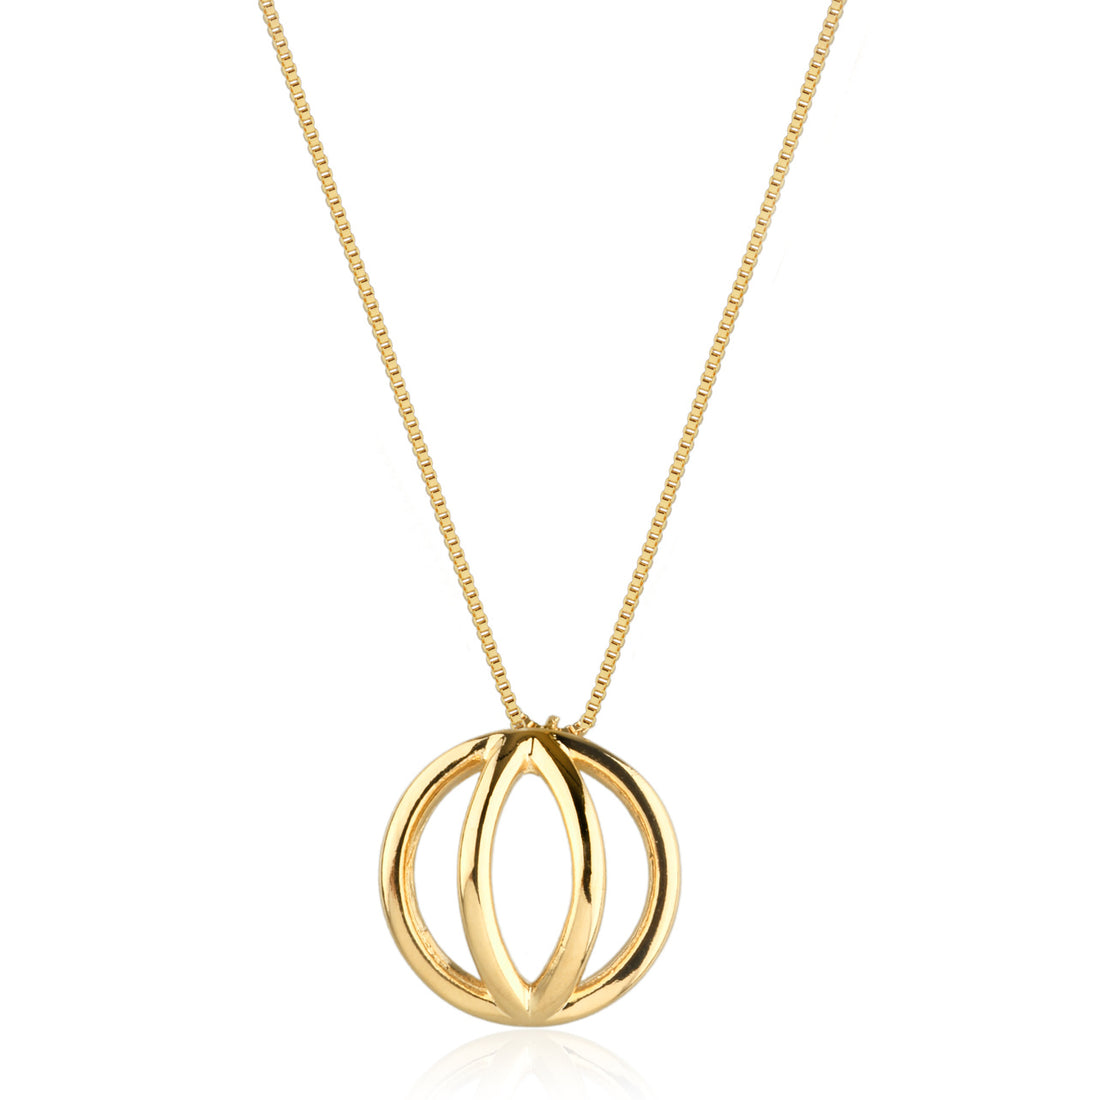 3D geometric circle necklace